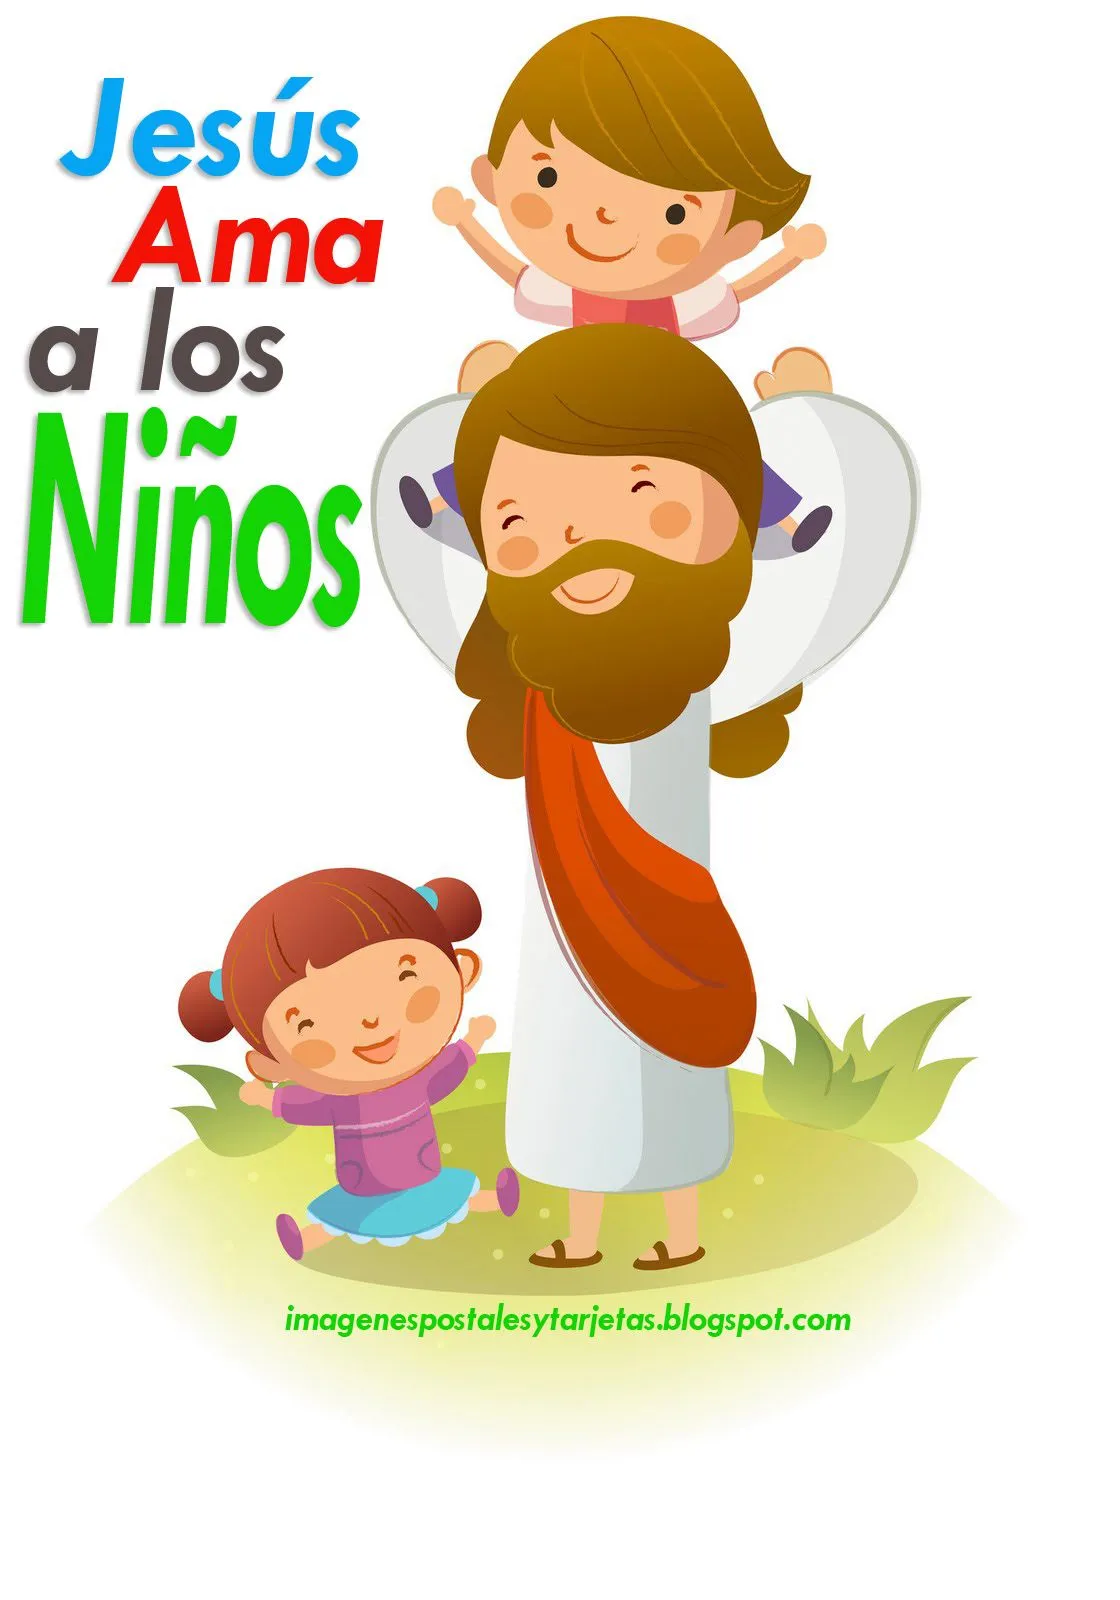 Imagenes cristianas para niños - Imagui